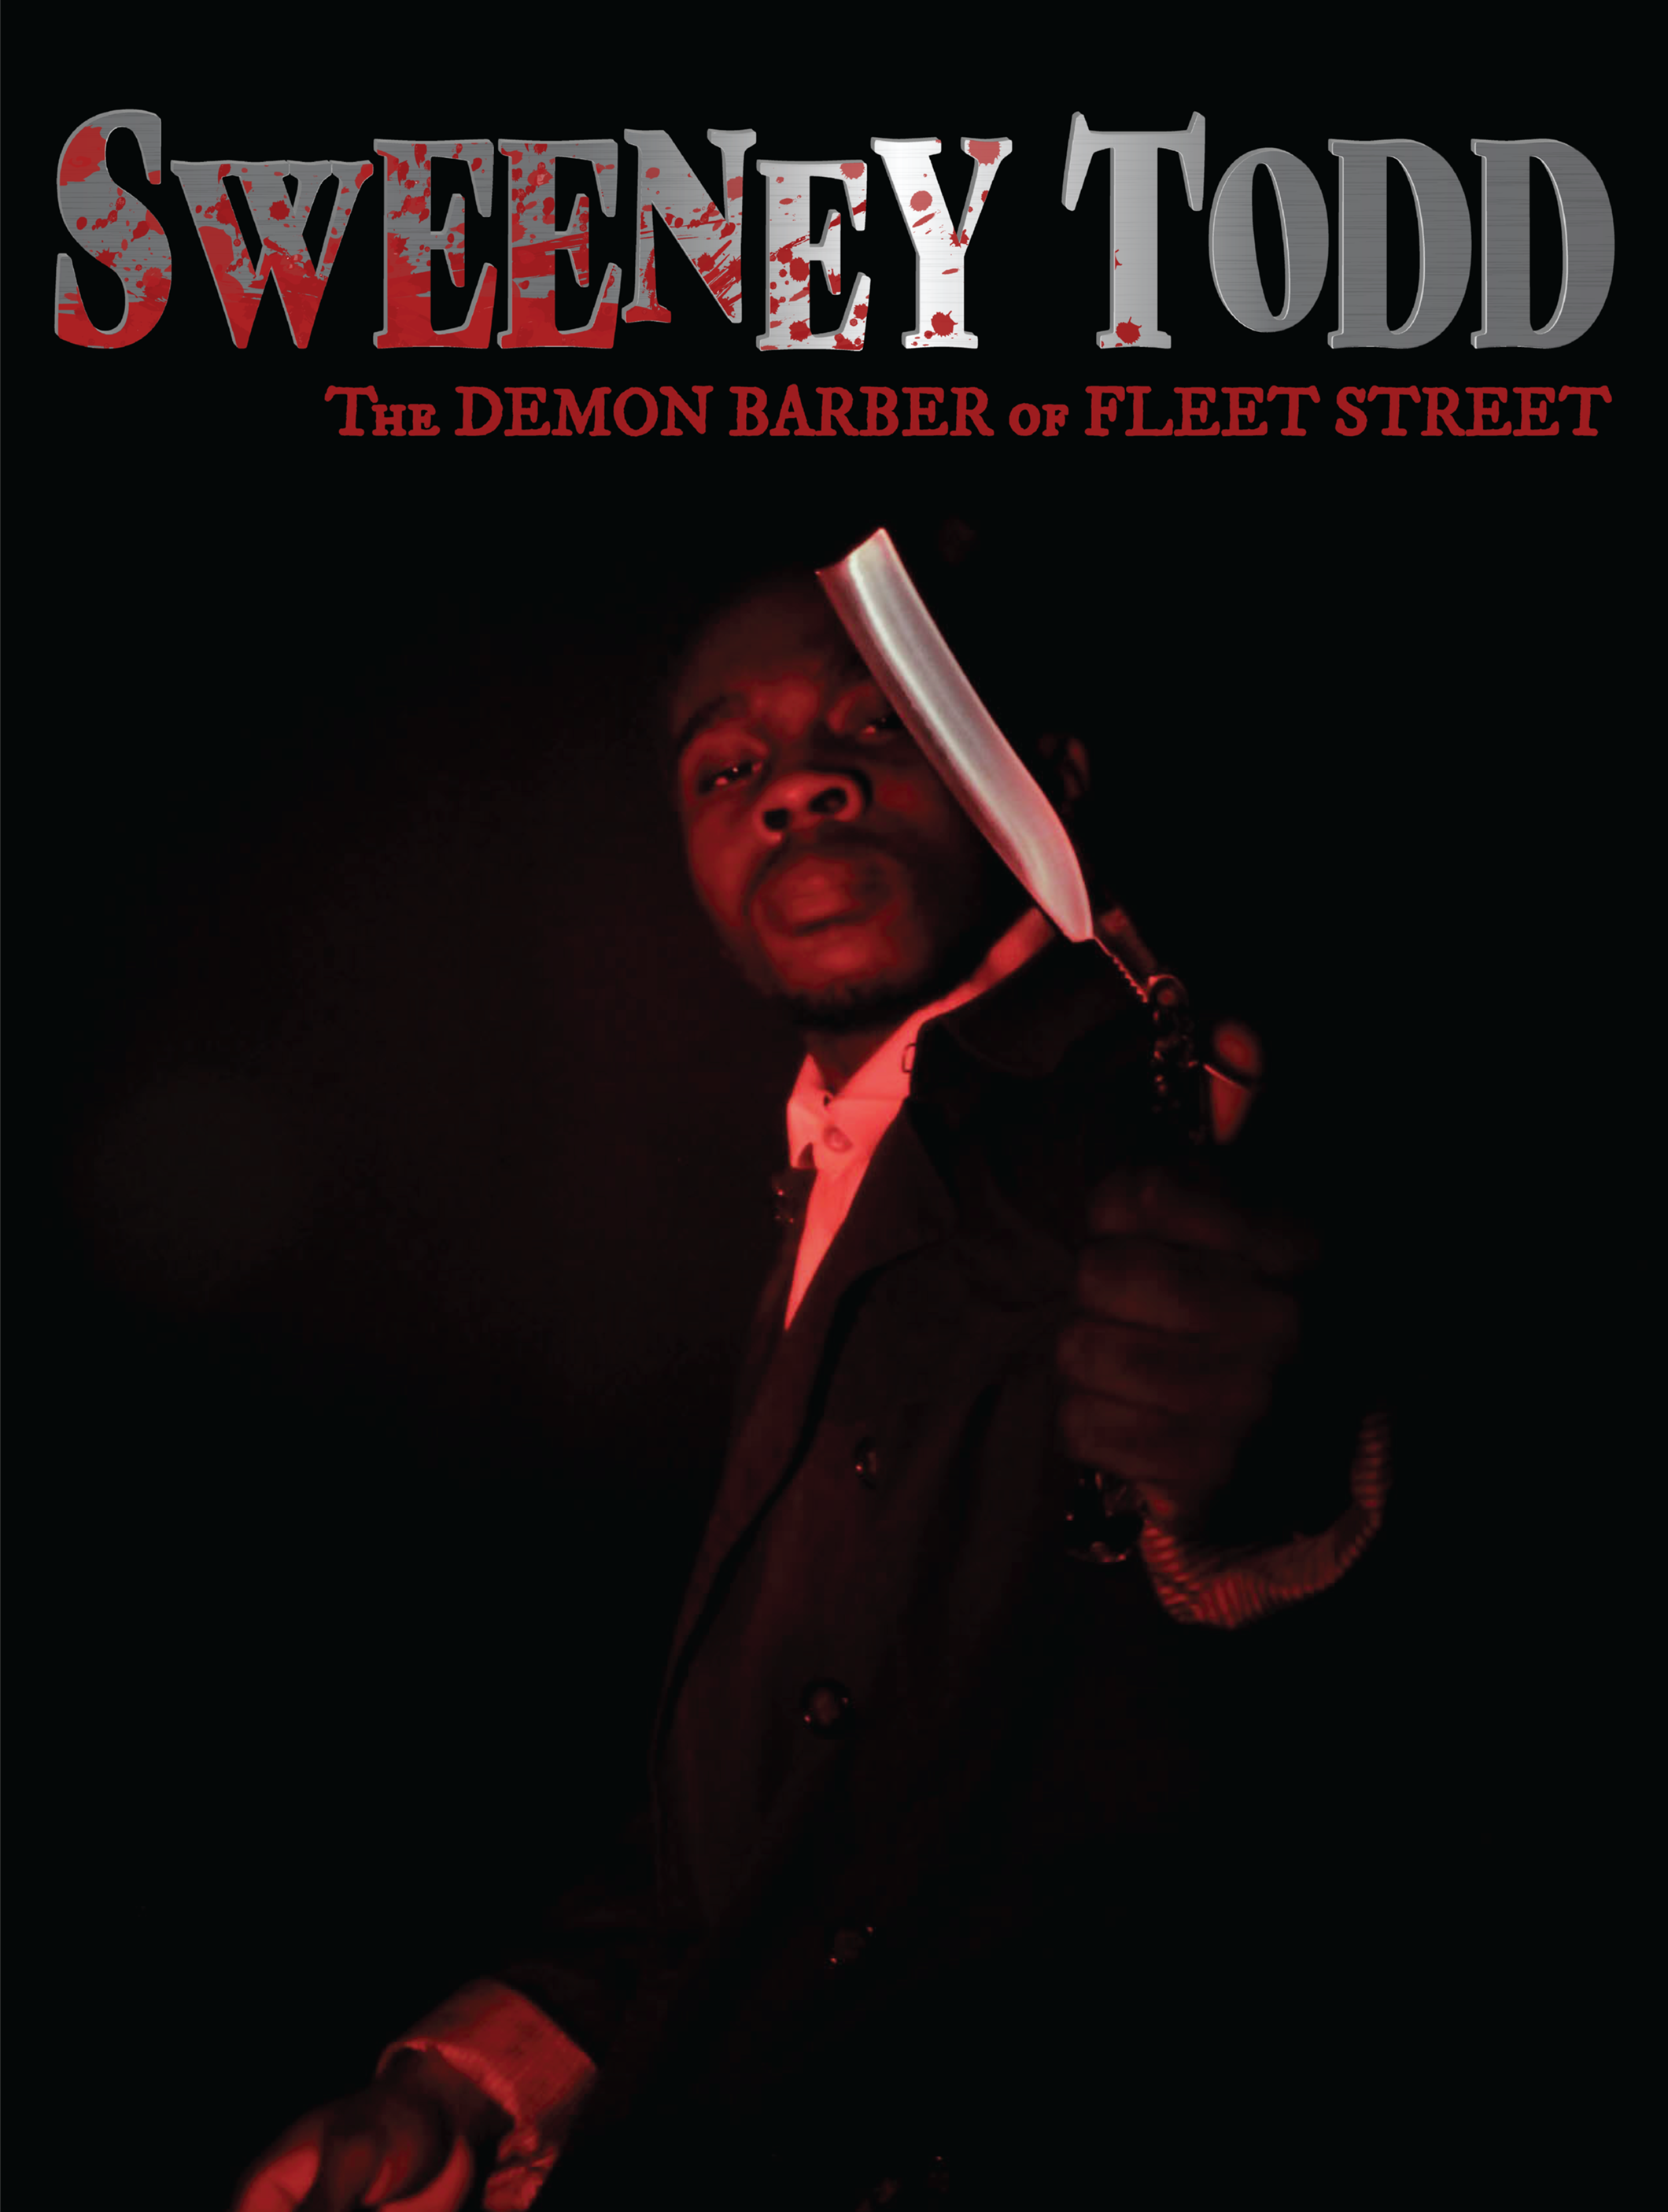 Sweeney Todd The Demon Barber of Fleet Street at Boston University